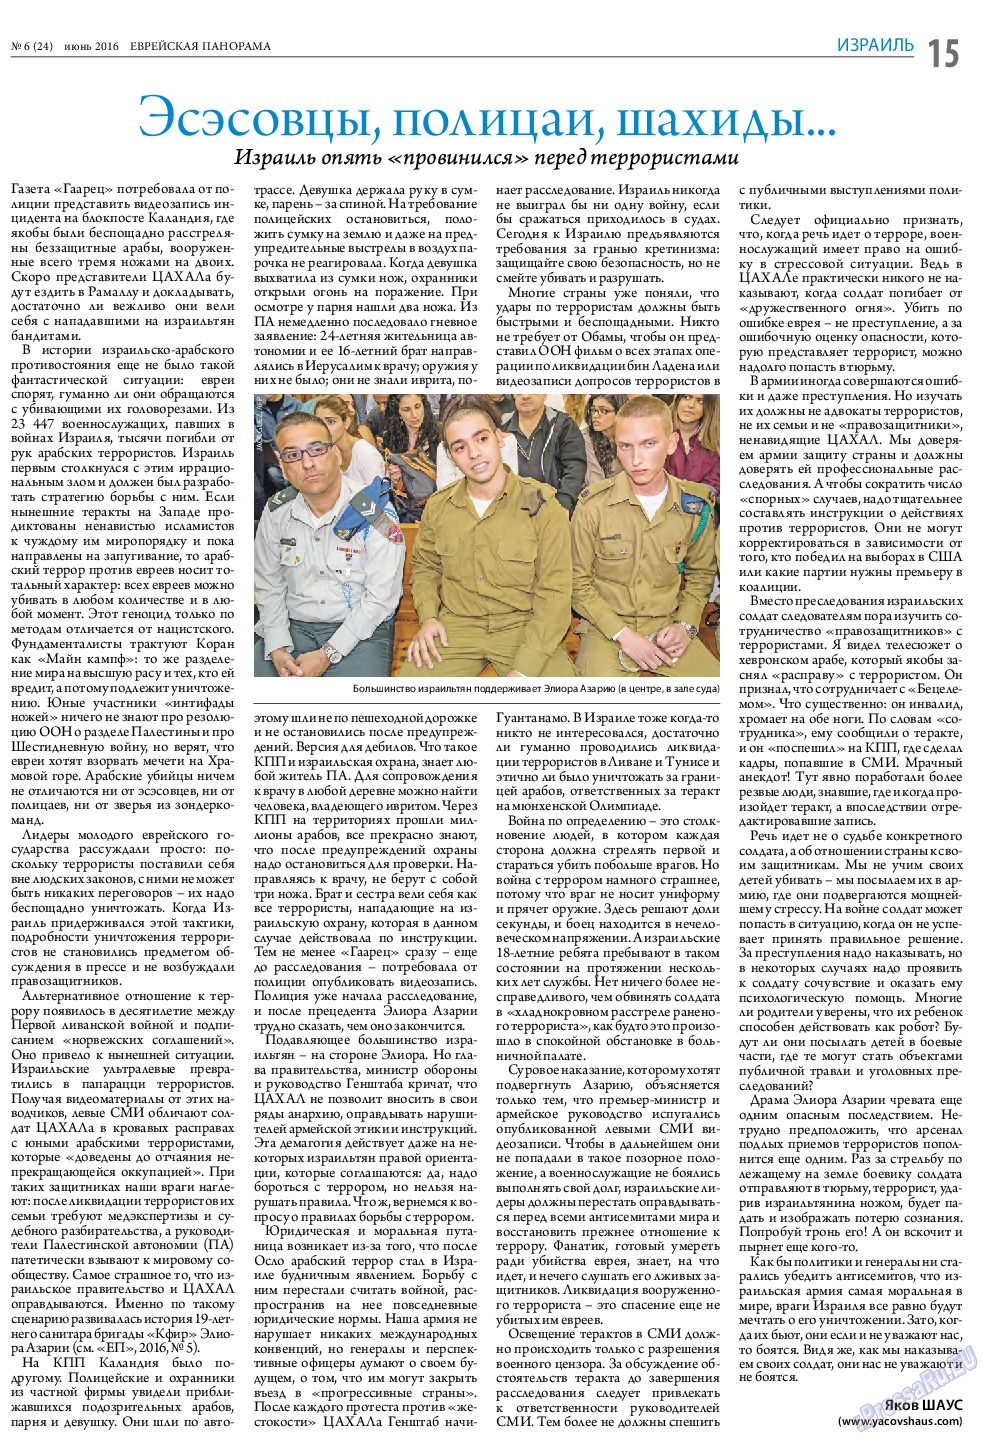 Еврейская панорама, газета. 2016 №6 стр.15